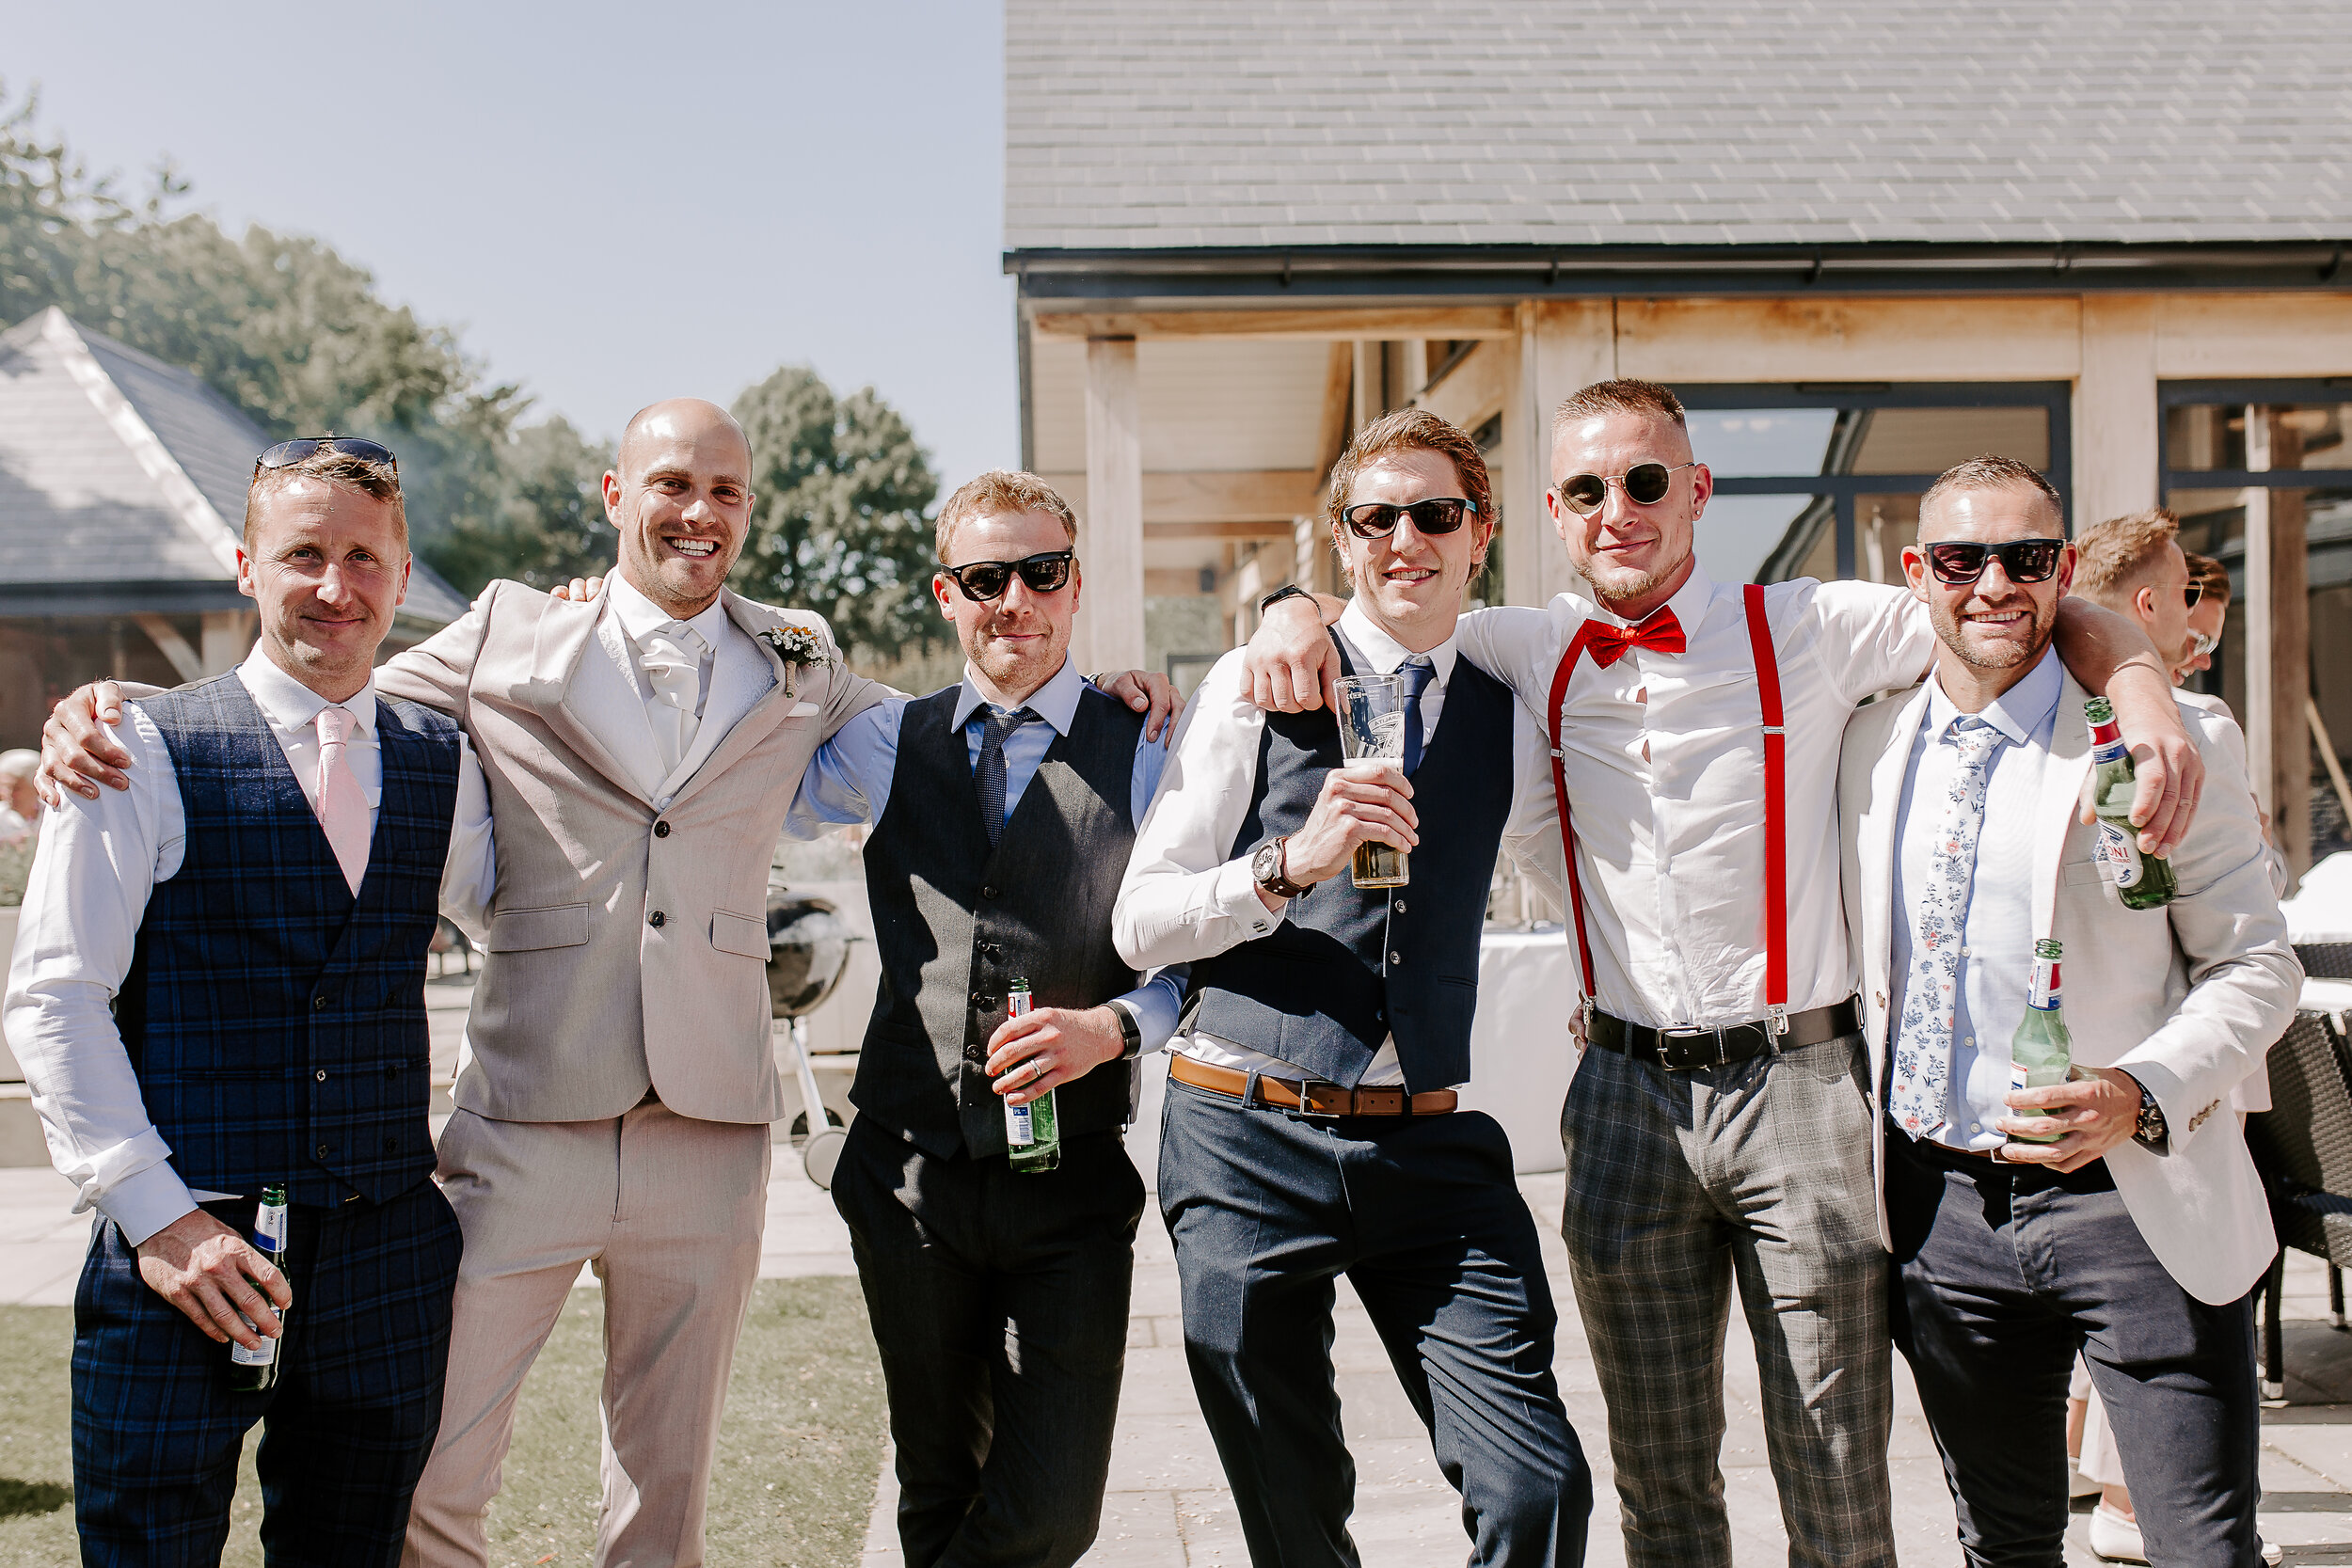 wedding blokes, wedding men, ushers, groomsmen, best man, wedding dudes, wedding fashion, men's fashion, sunglasses